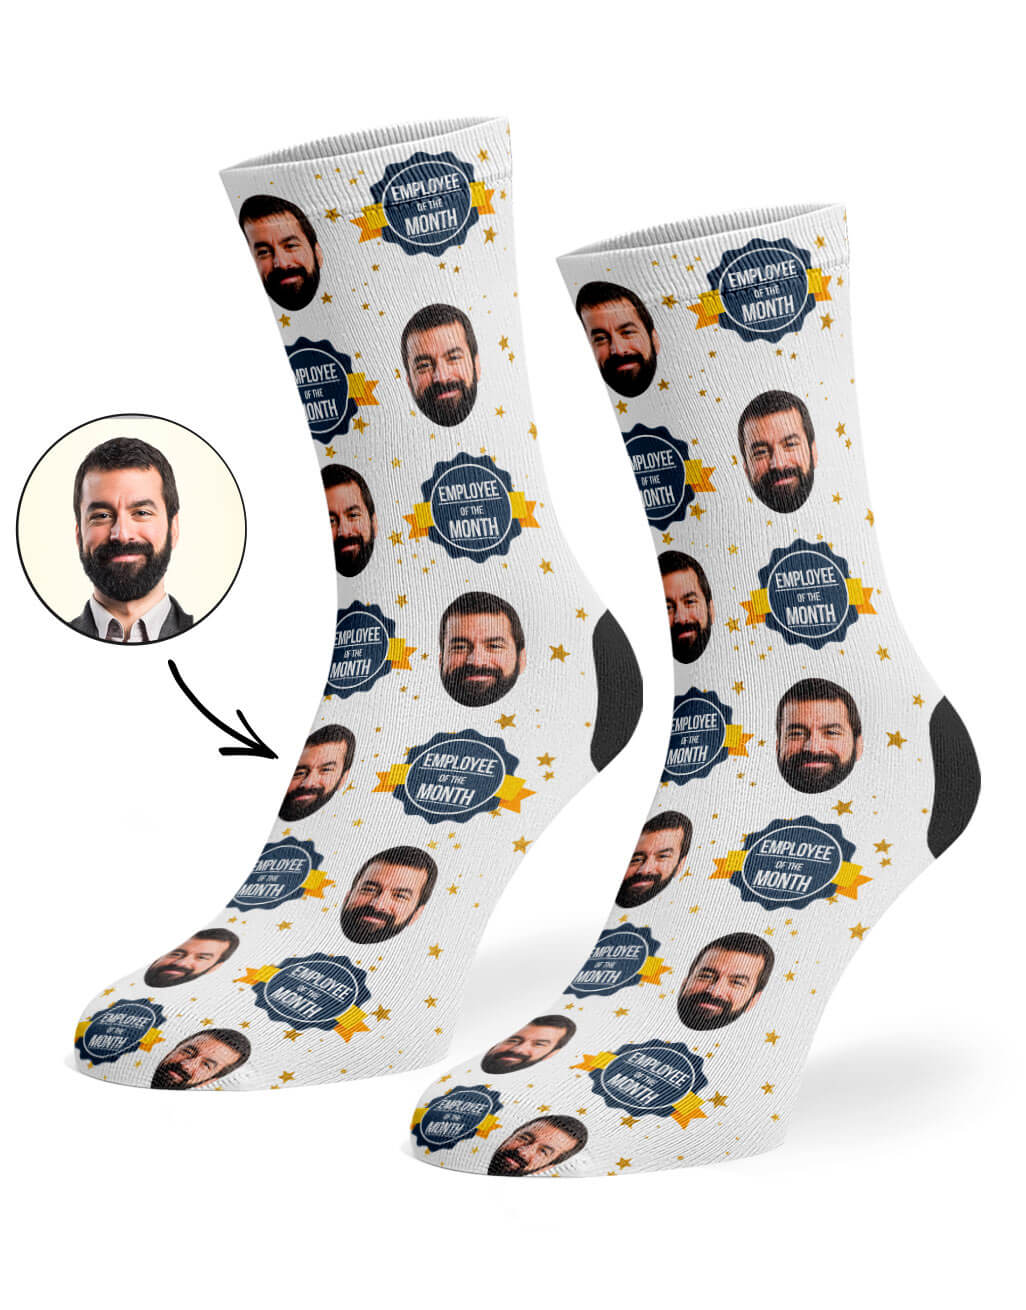 Employee Of The Month Custom Socks